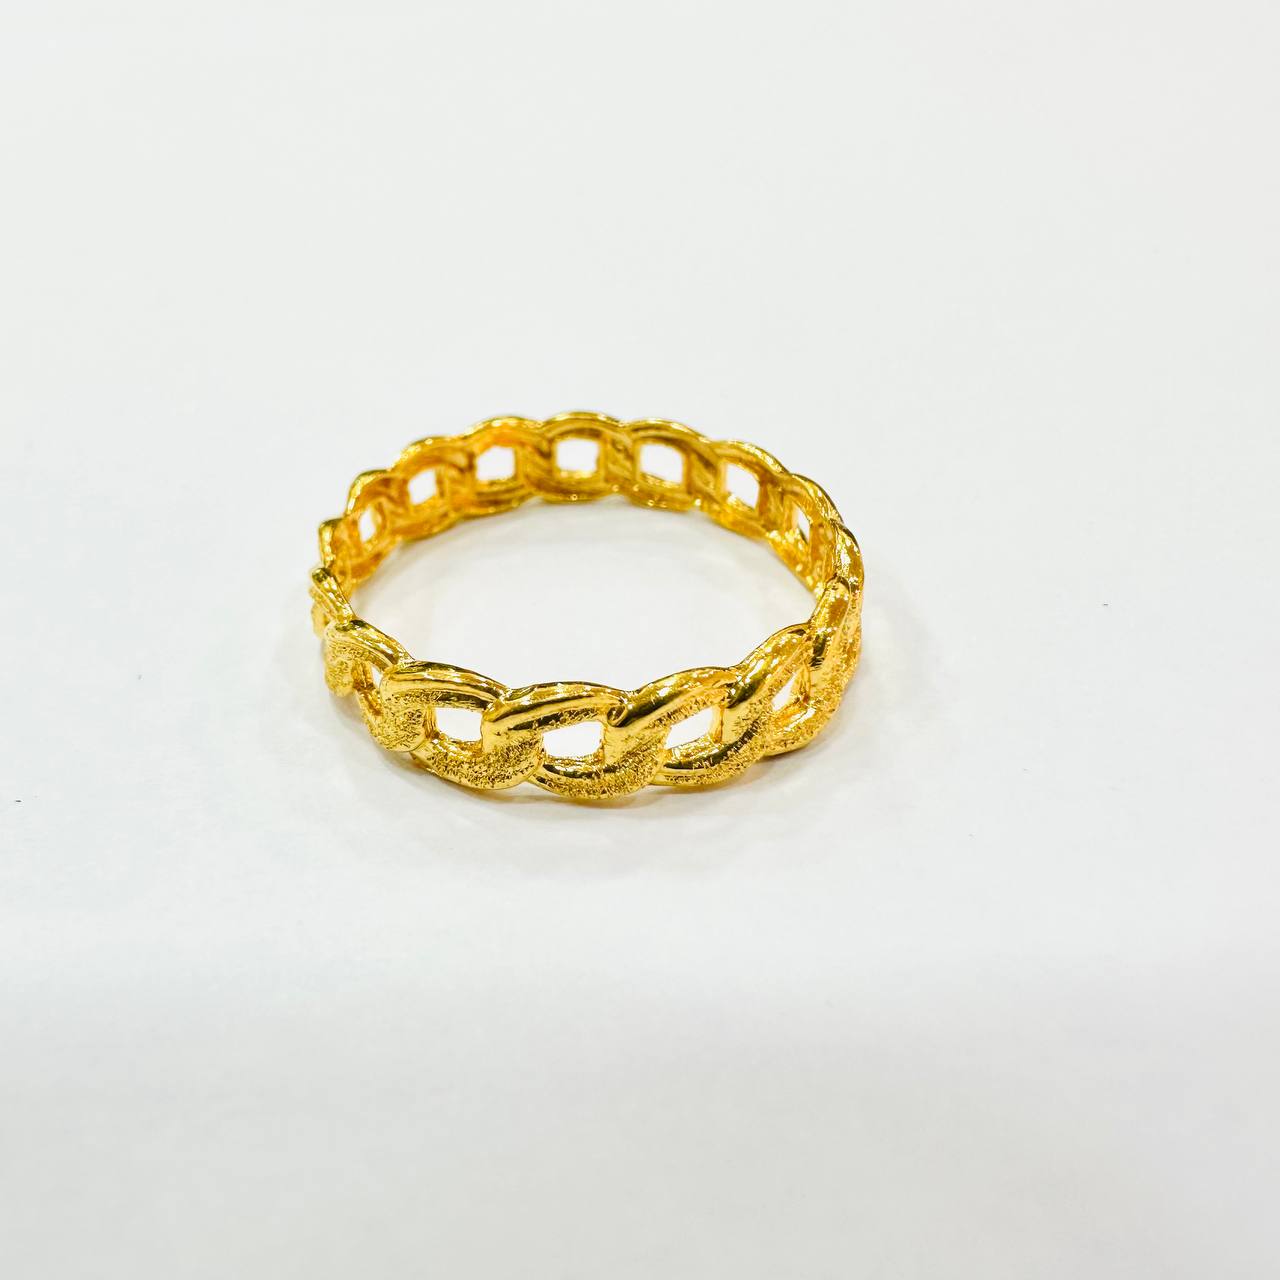 22k / 916 Gold Full Coco Ring Slim-916 gold-Best Gold Shop